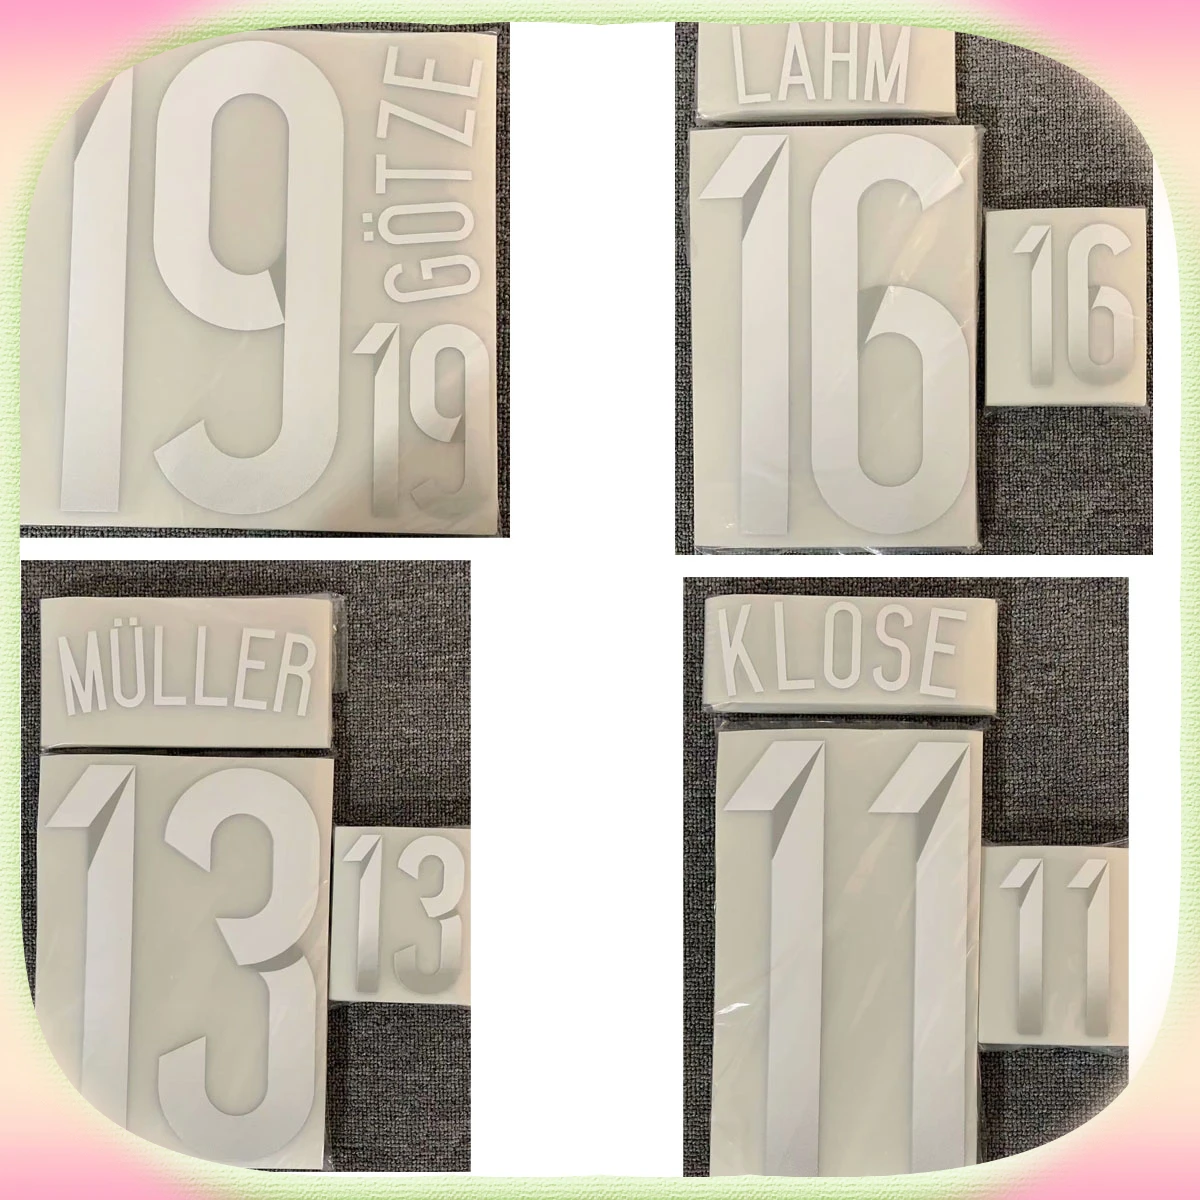 

Silver 2014 Gotze Nameset Lahm Muller Klose Schweinsteiger Printing Iron ON Patches Soccer Badge